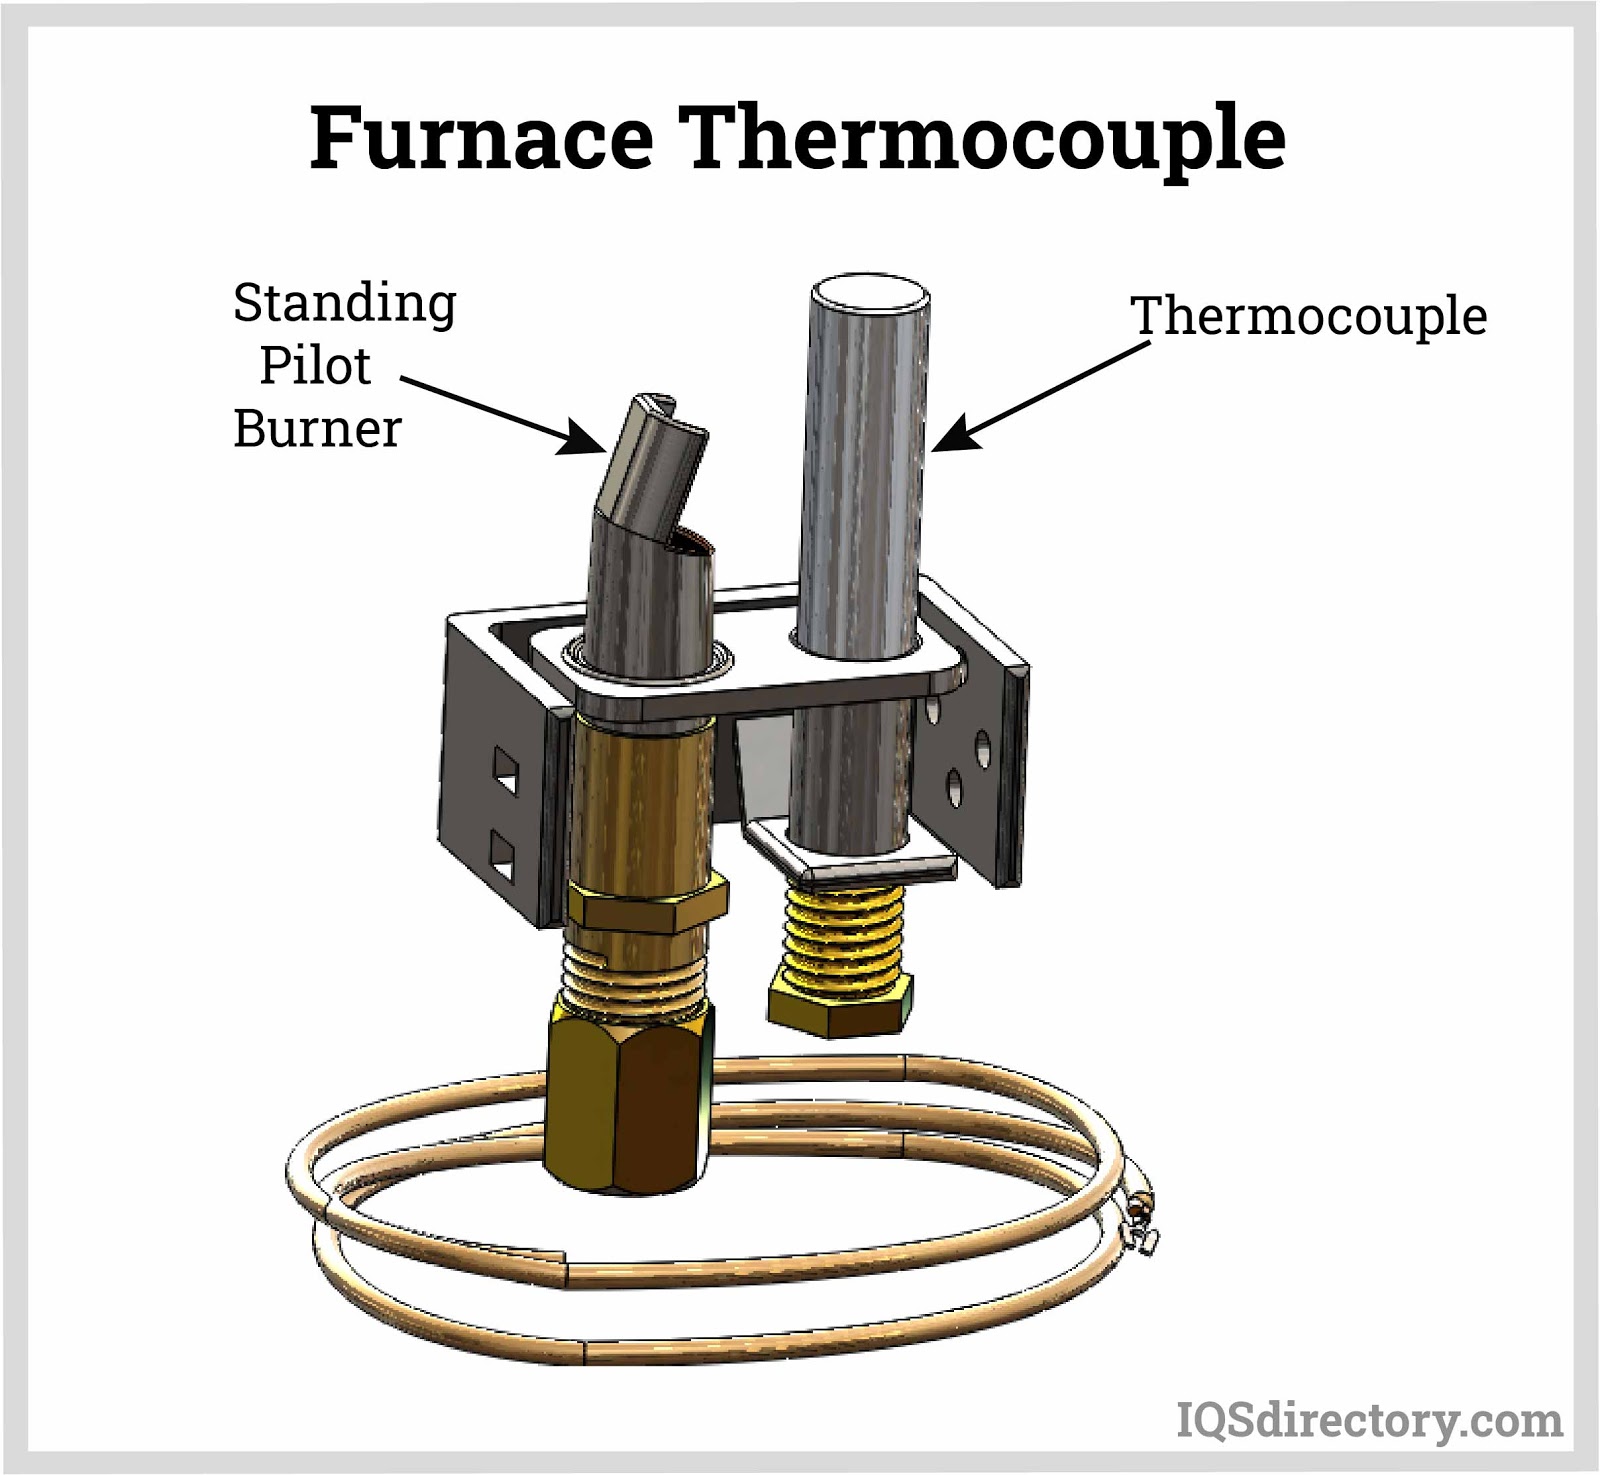 Furnace Thermocouple